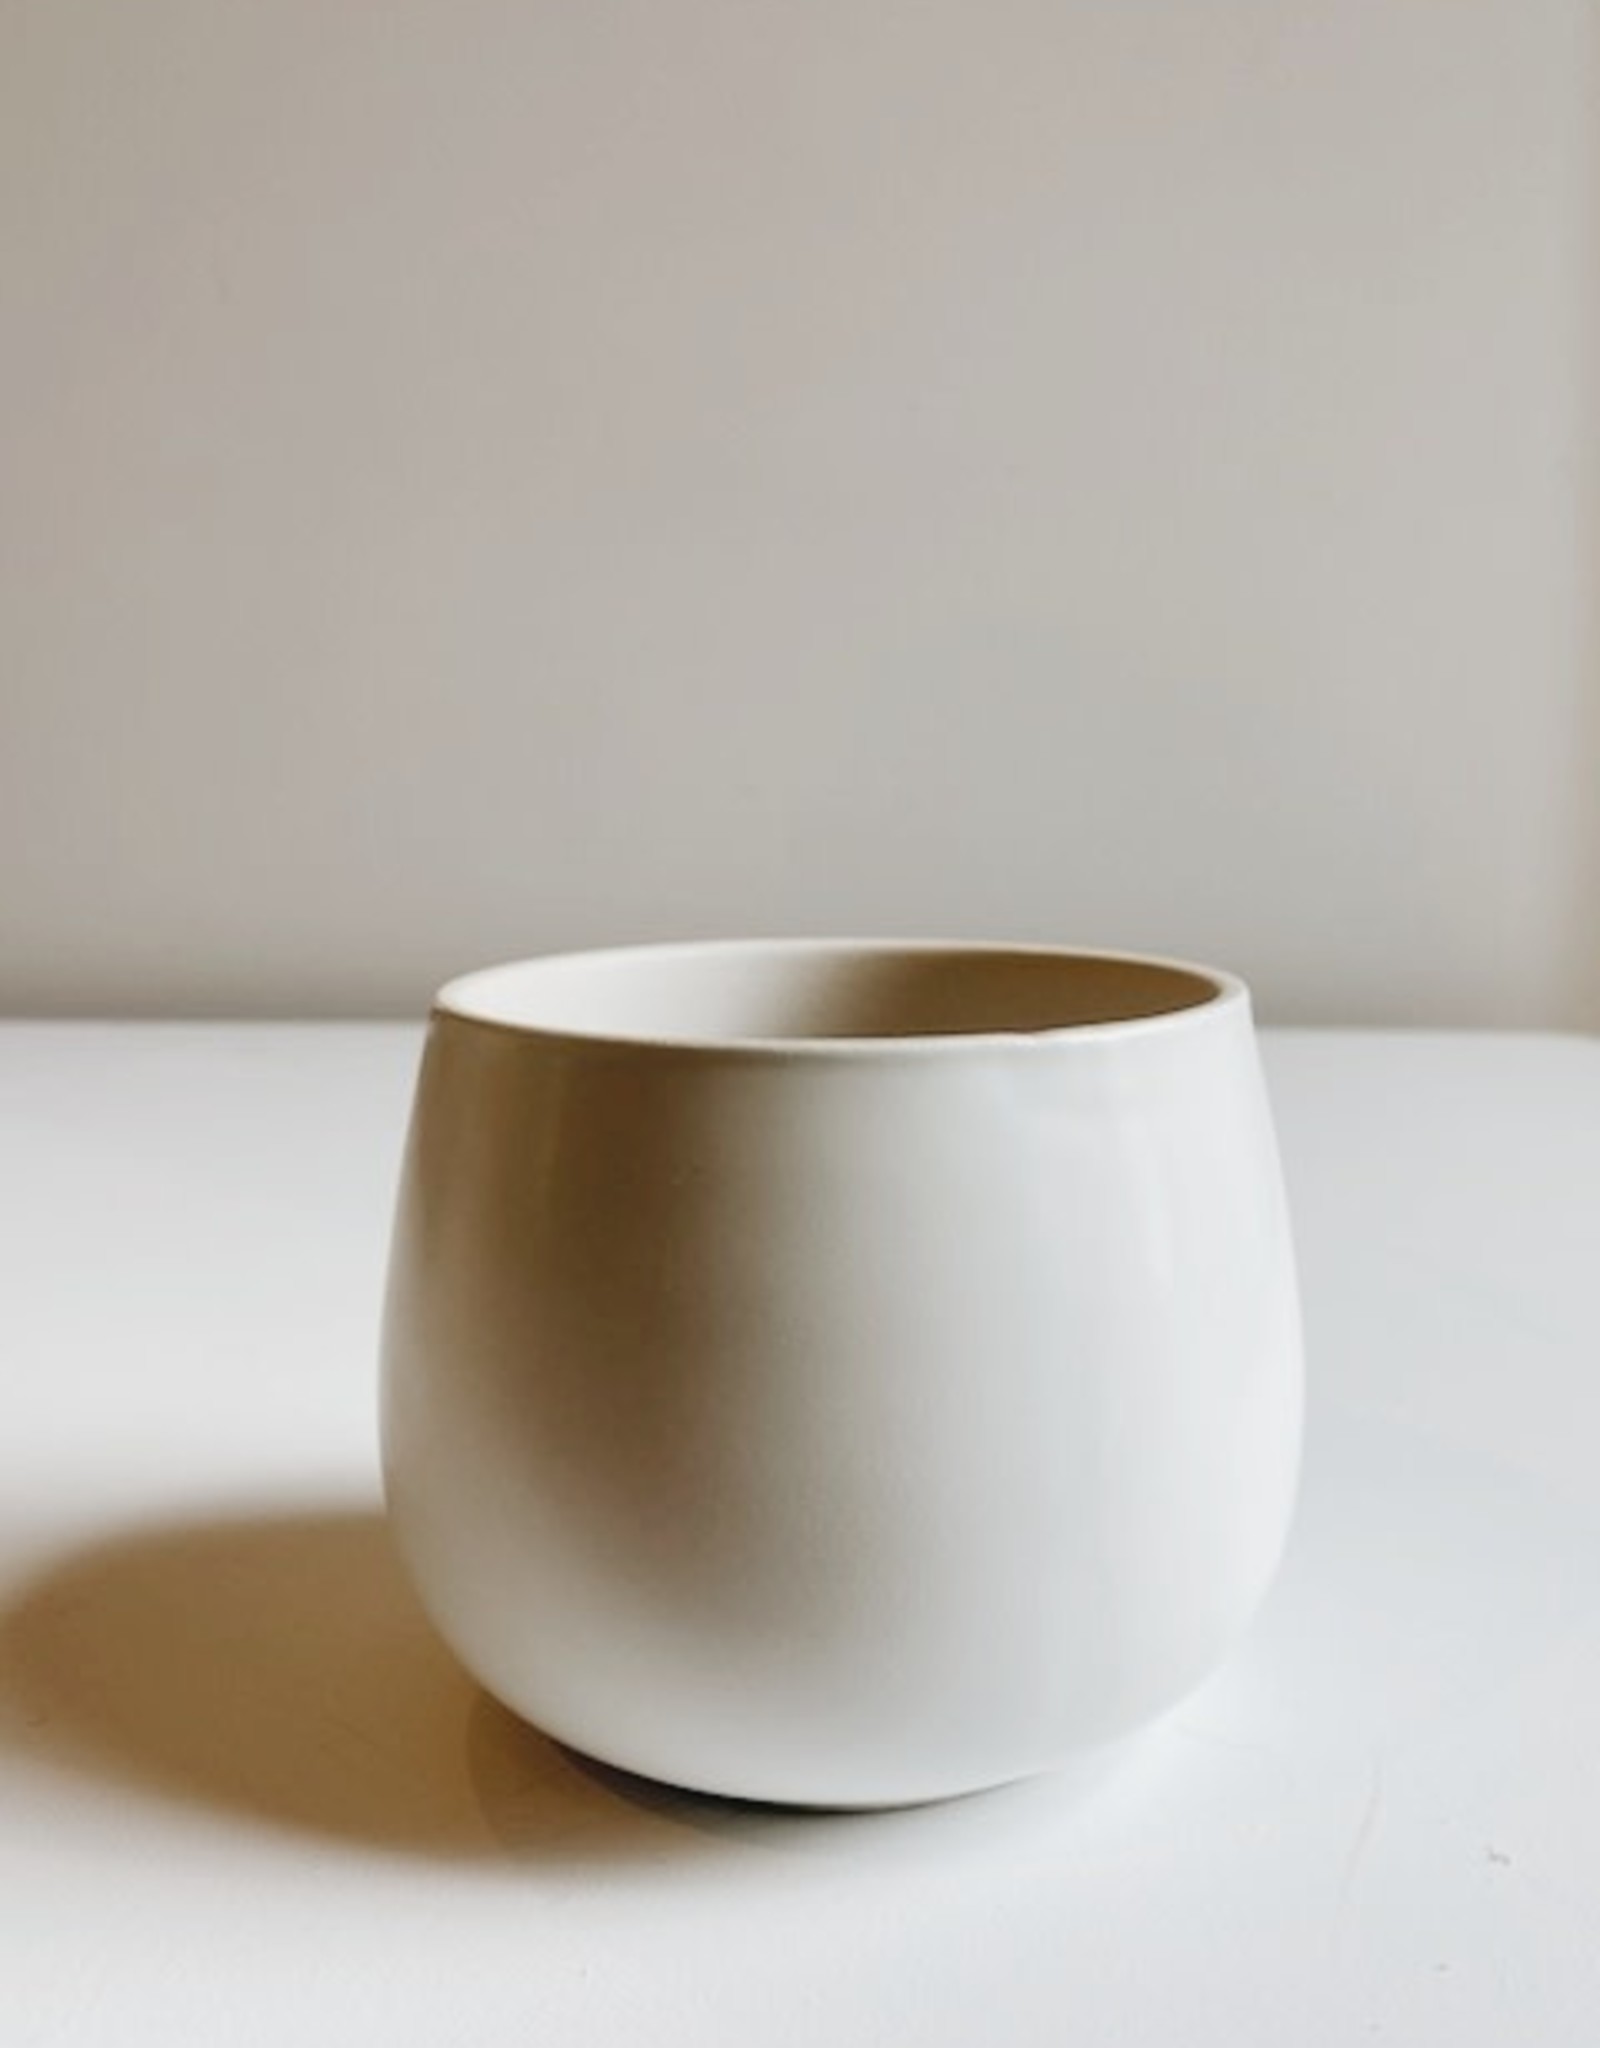 Smooth Ceramic Flower Pot